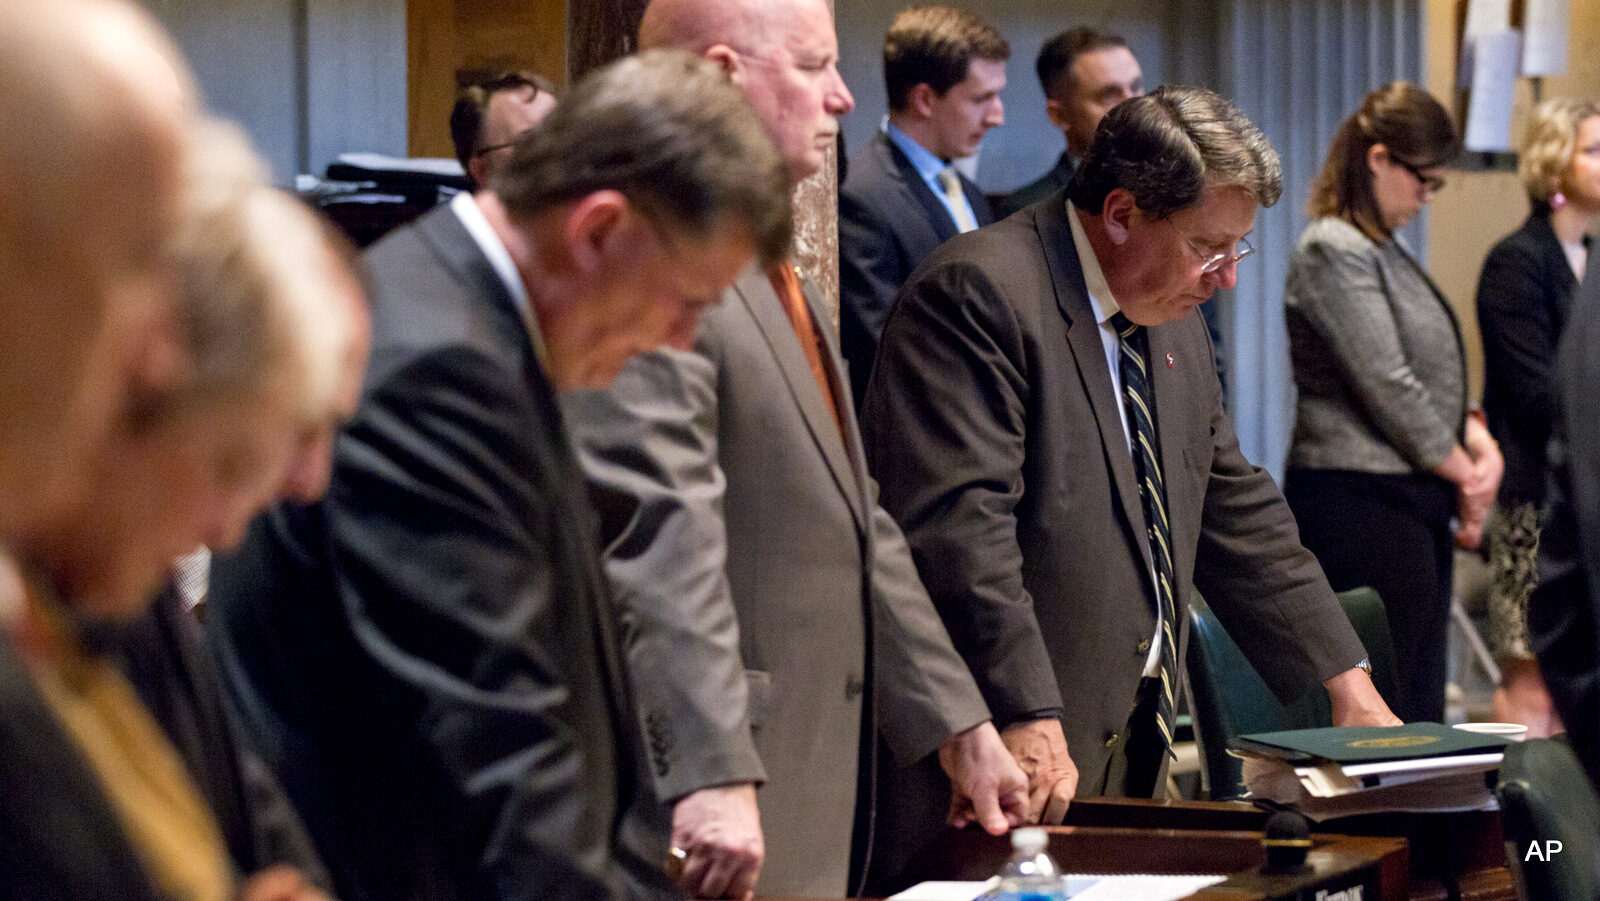 State Senate Majority Leader Mark Norris, R-, right, and other senators bow their heads during the prayer before the Senate floor session in Nashville, Tenn., April 16, 2015. (AP/Erik Schelzig)